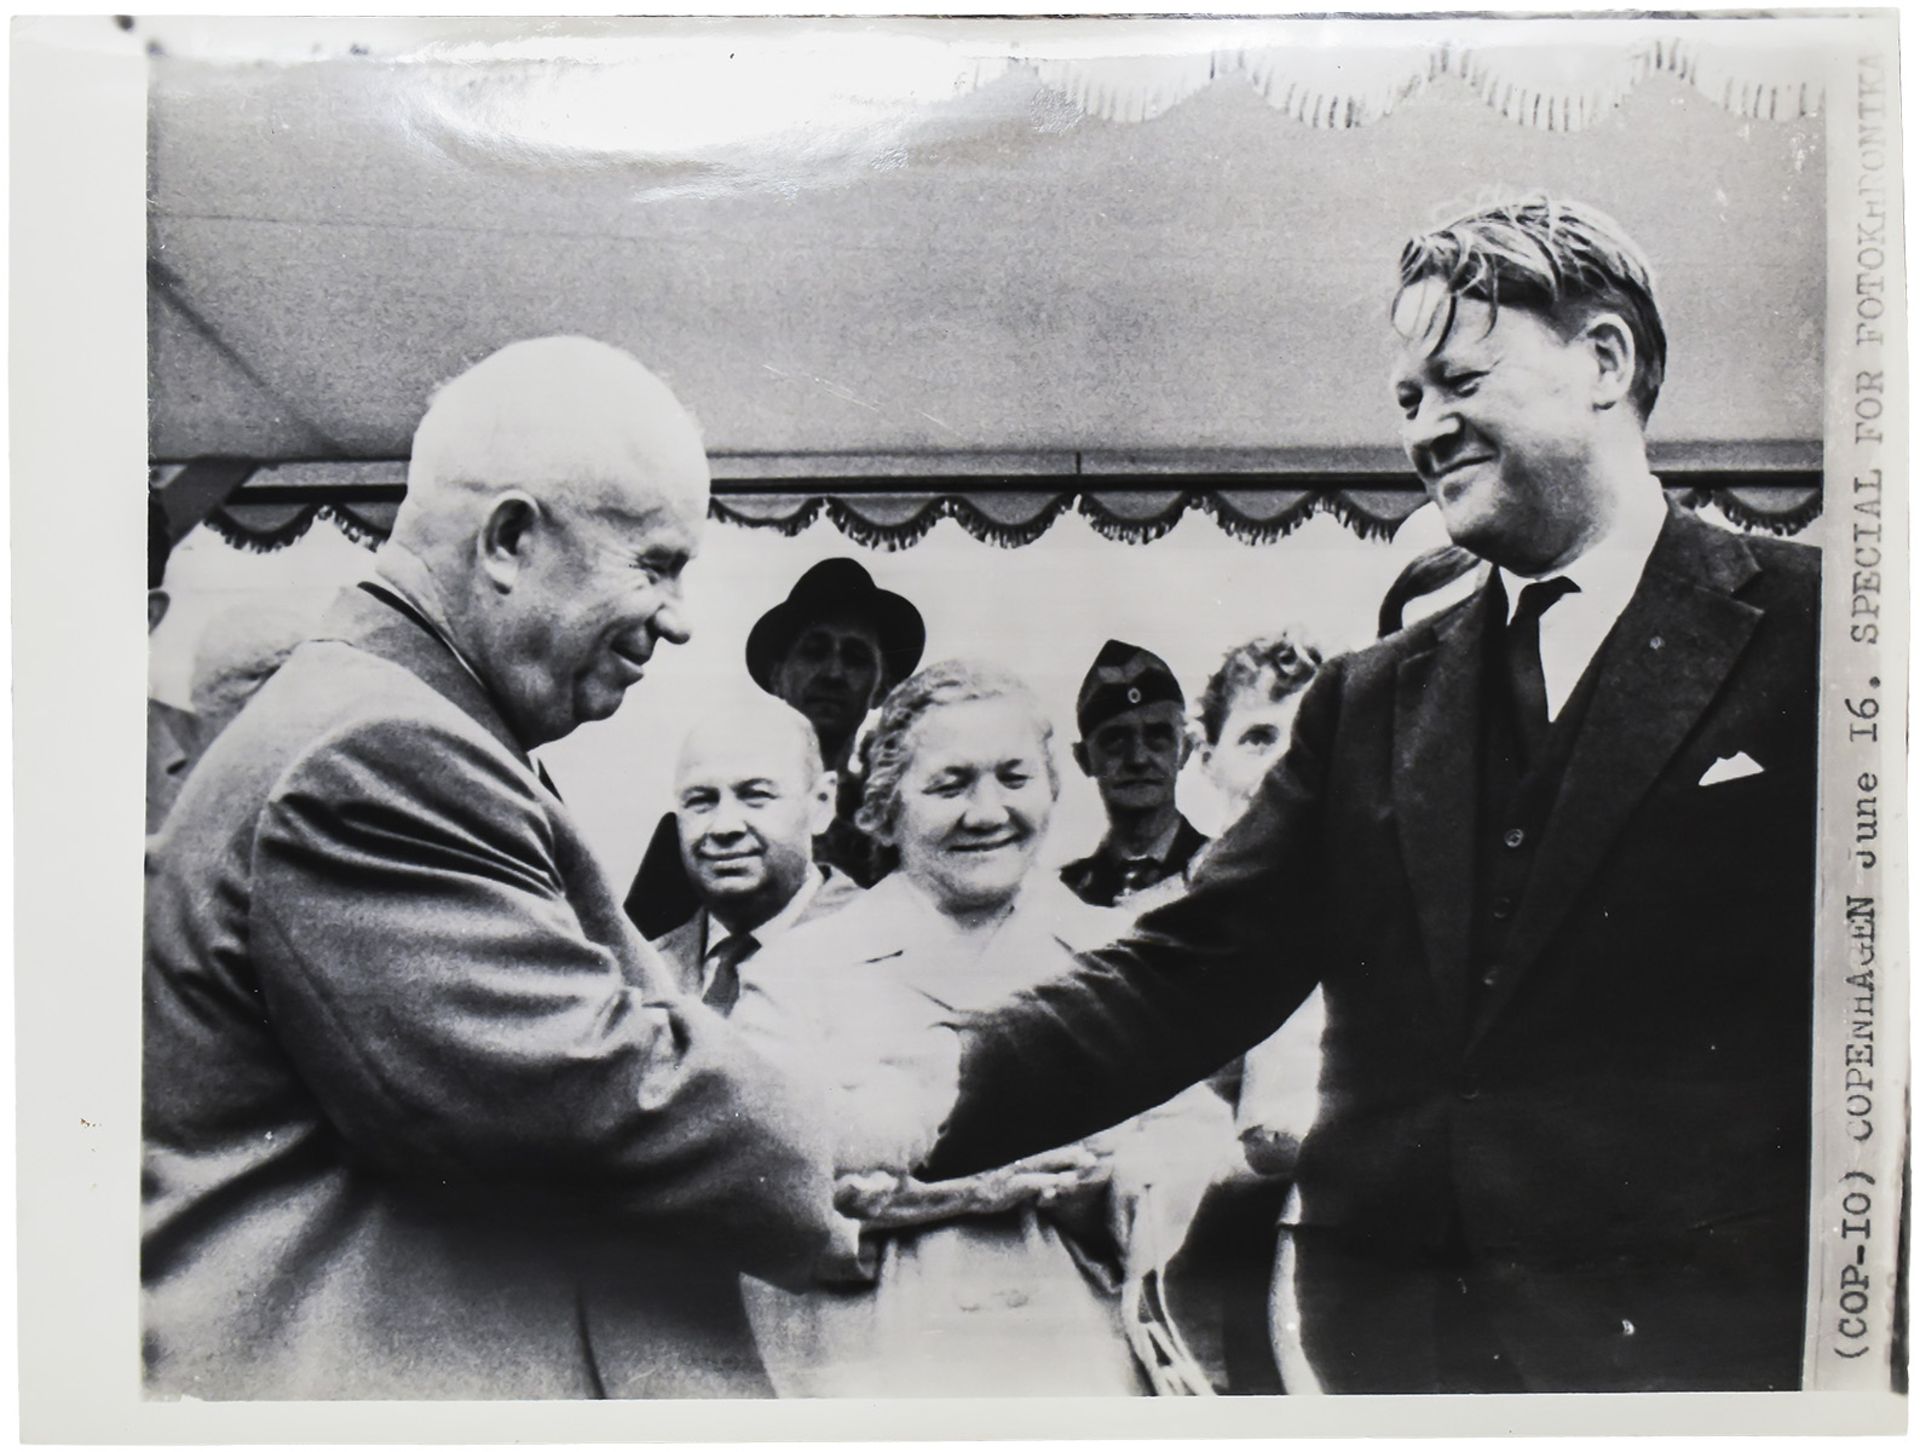 Egorov, V. Nikita Khrushchev and Danish Prime Minister Jens Otto Krag. 1964. 18x24 cm.